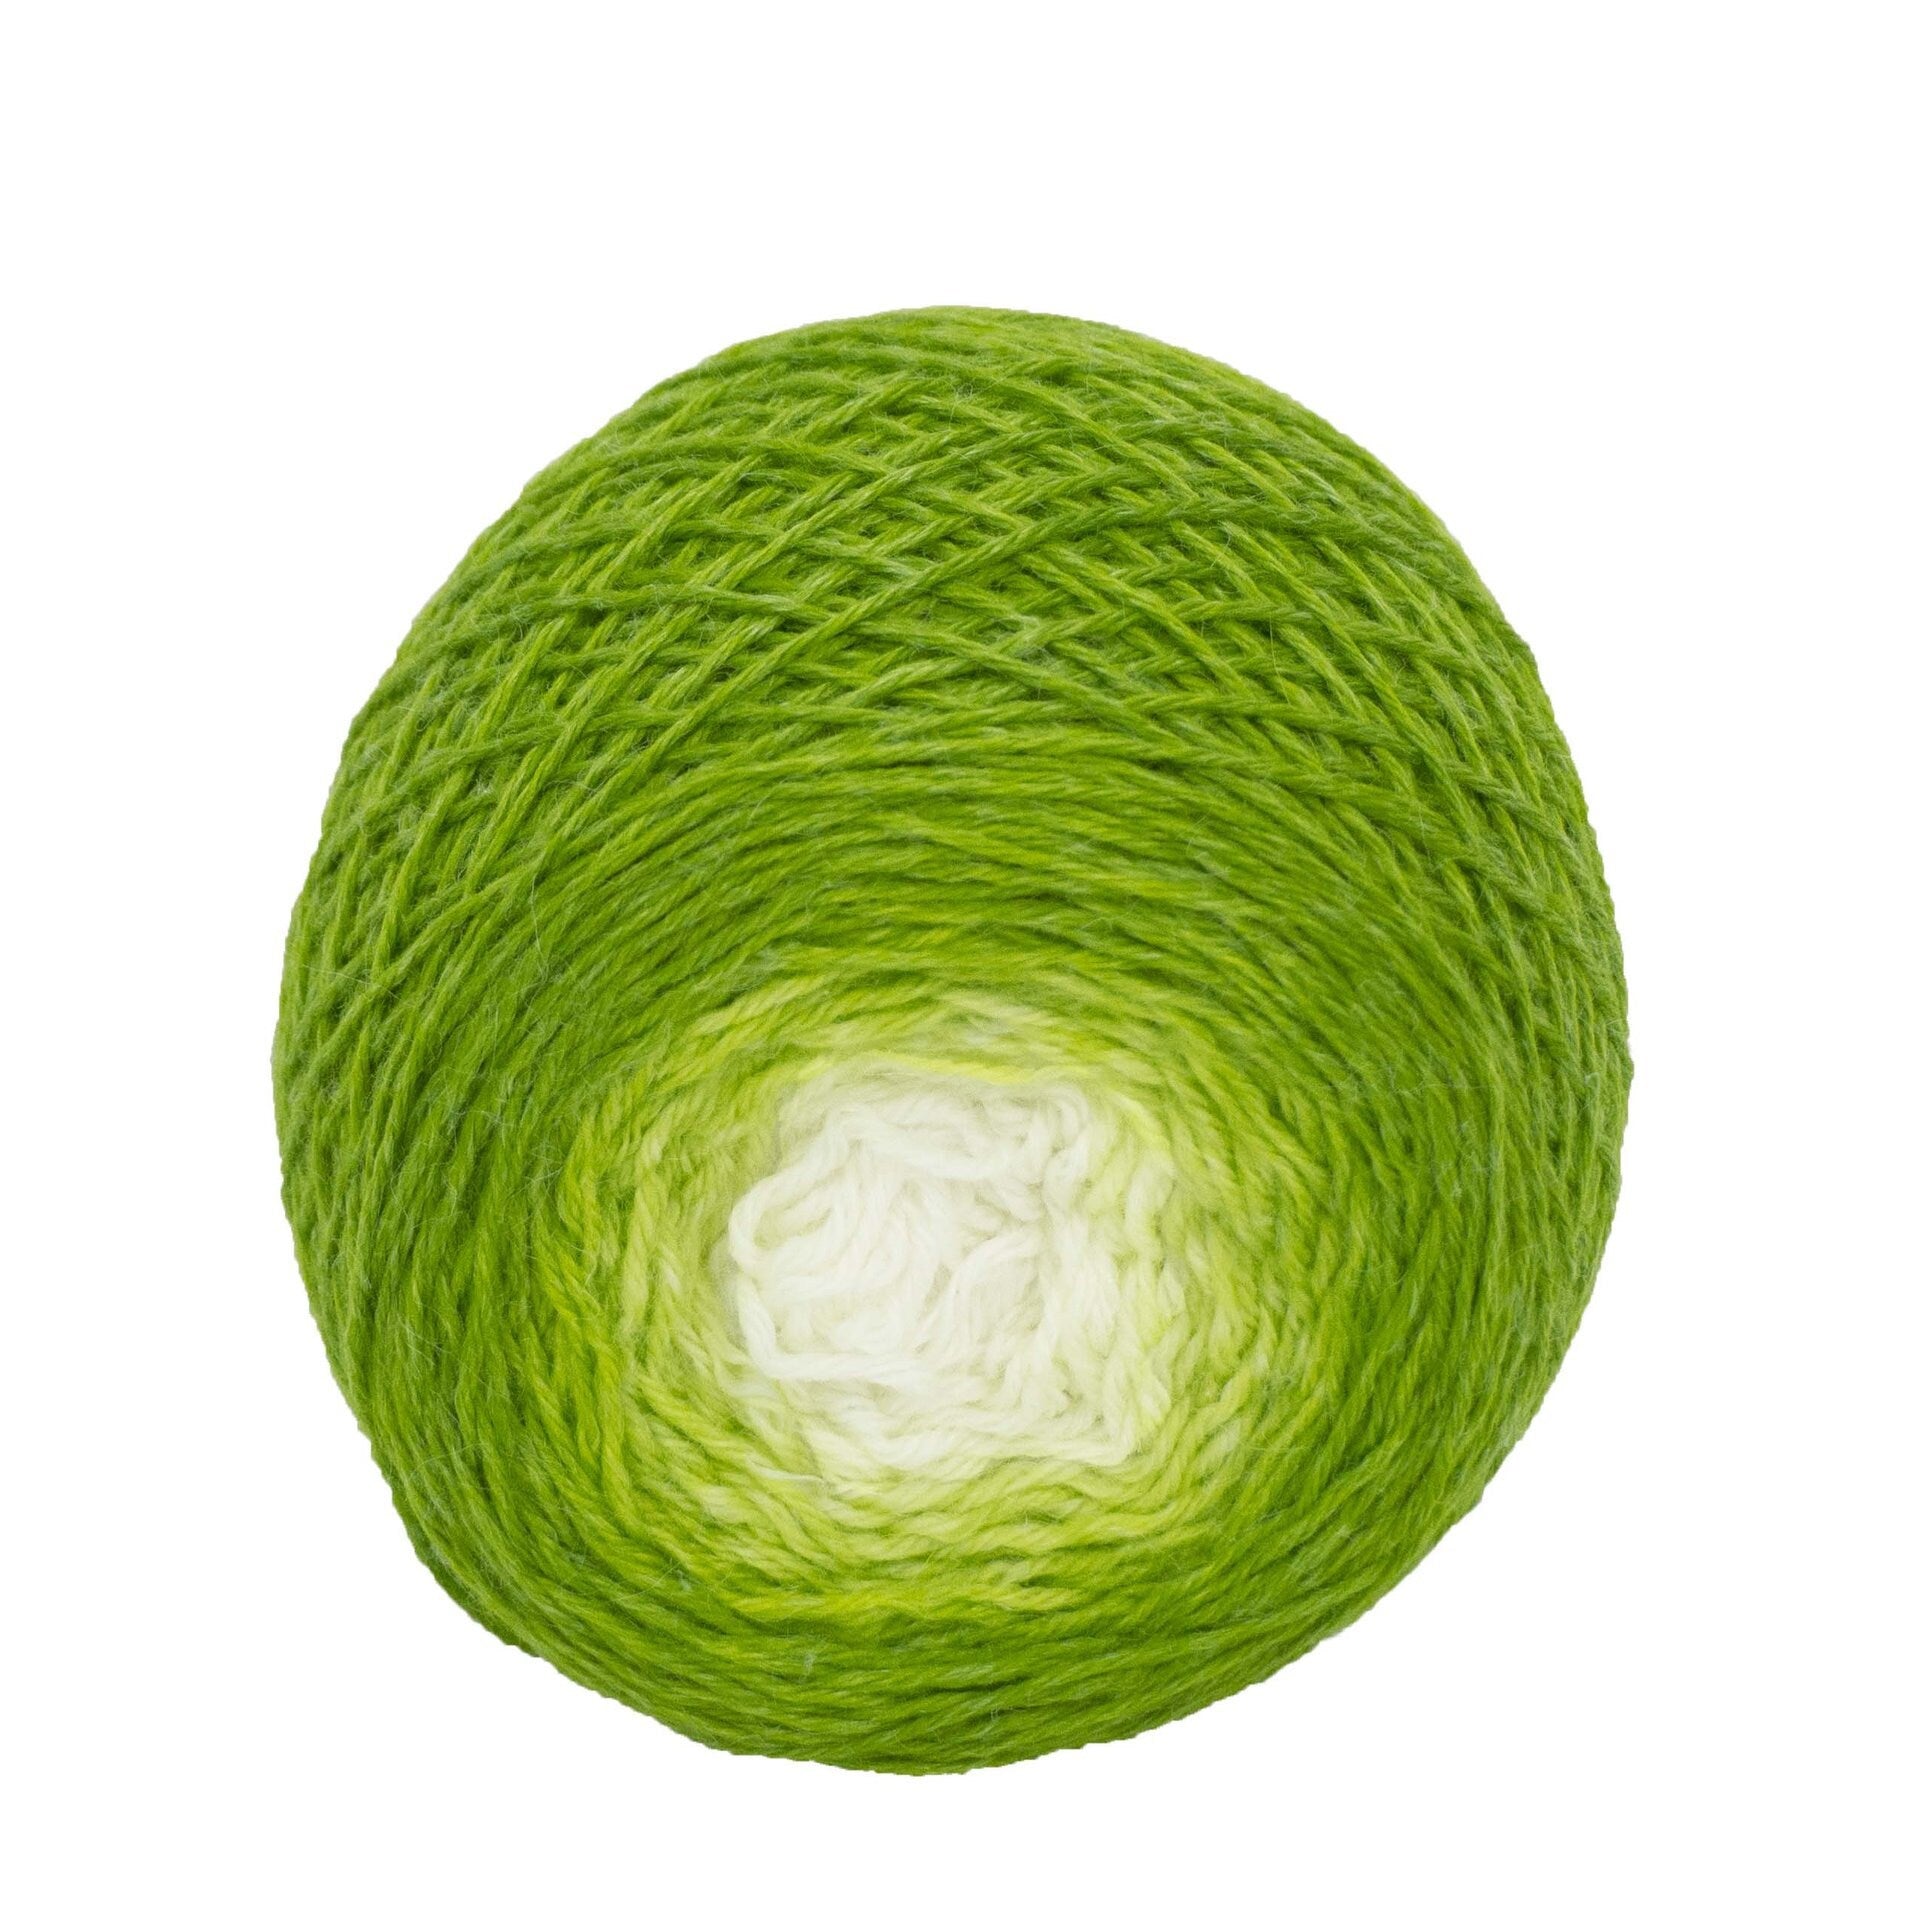 Full " Sprout " - Lleaf SW Merino/Bamboo/Nylon Handpainted Gradient Fingering Weight Yarn 100g Skein